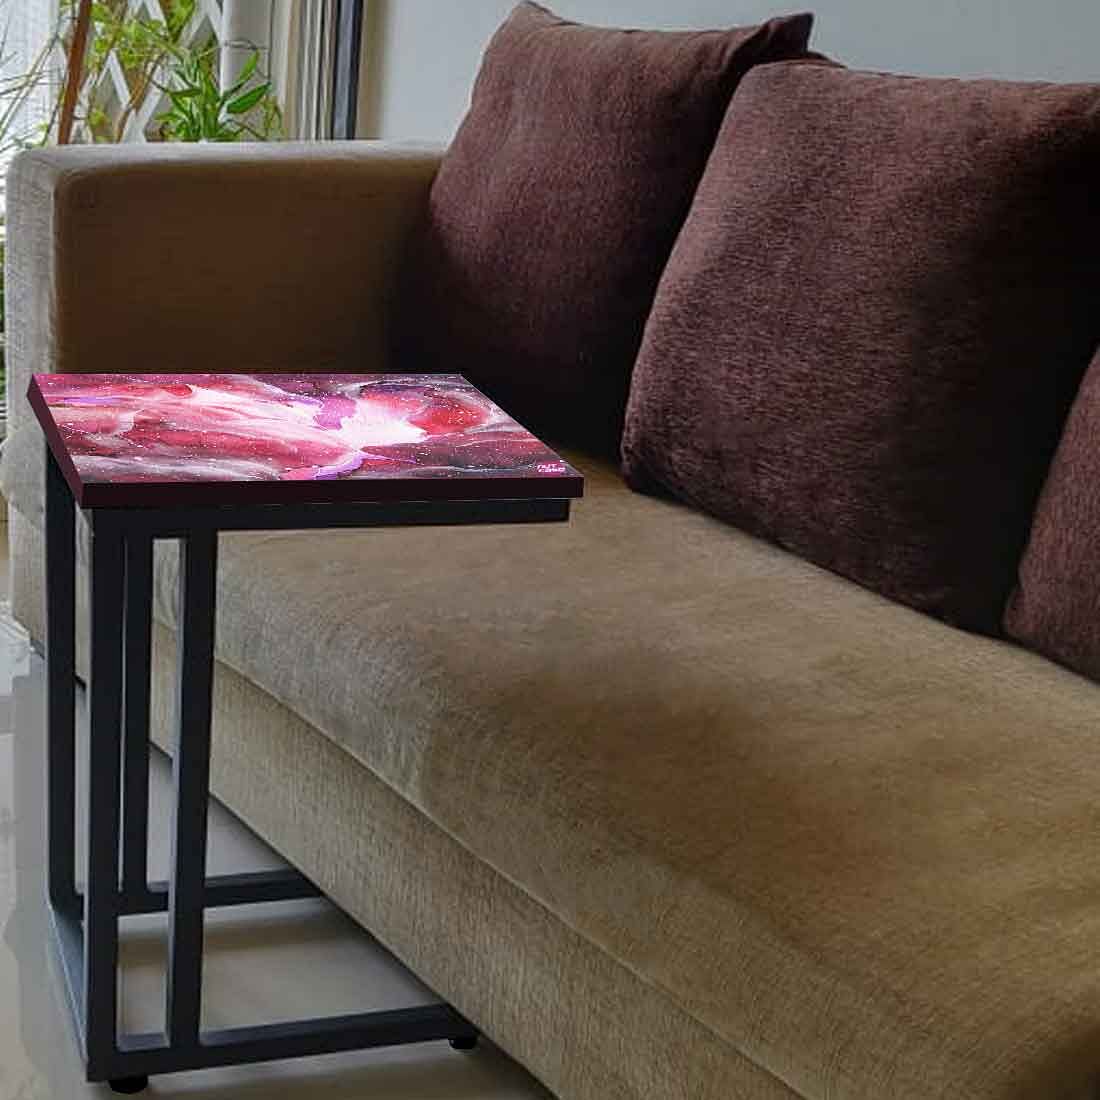 Beautiful Sofa Side C Table - Space Pink Watercolor Nutcase